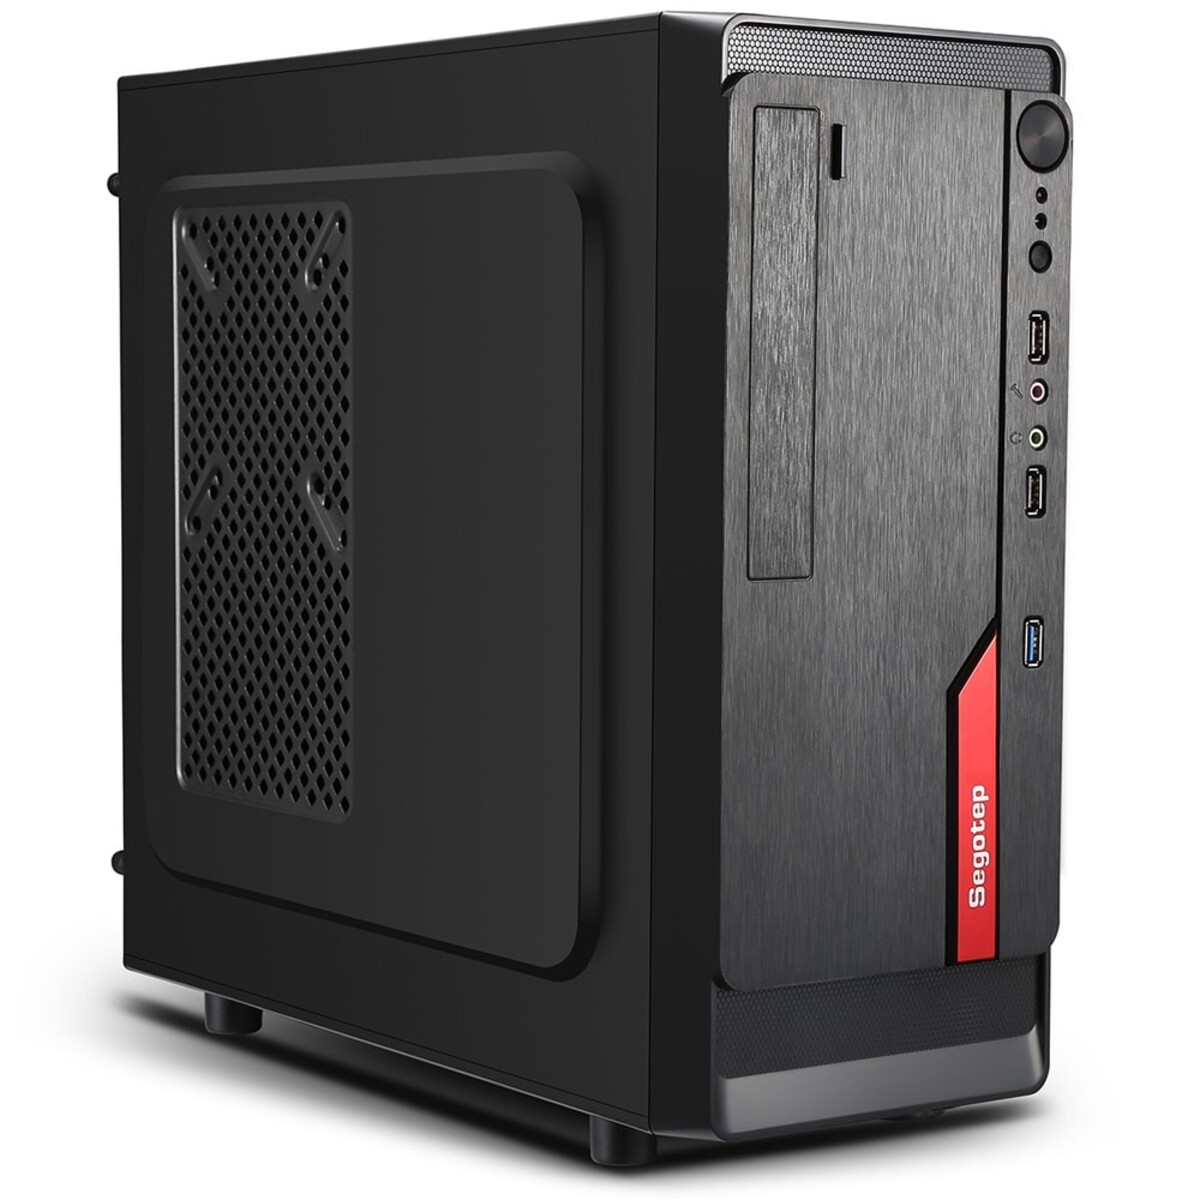 Sistem Ultra low power/buget cu AMD Athlon 200GE si Solus OS 3 - GNU/Linux